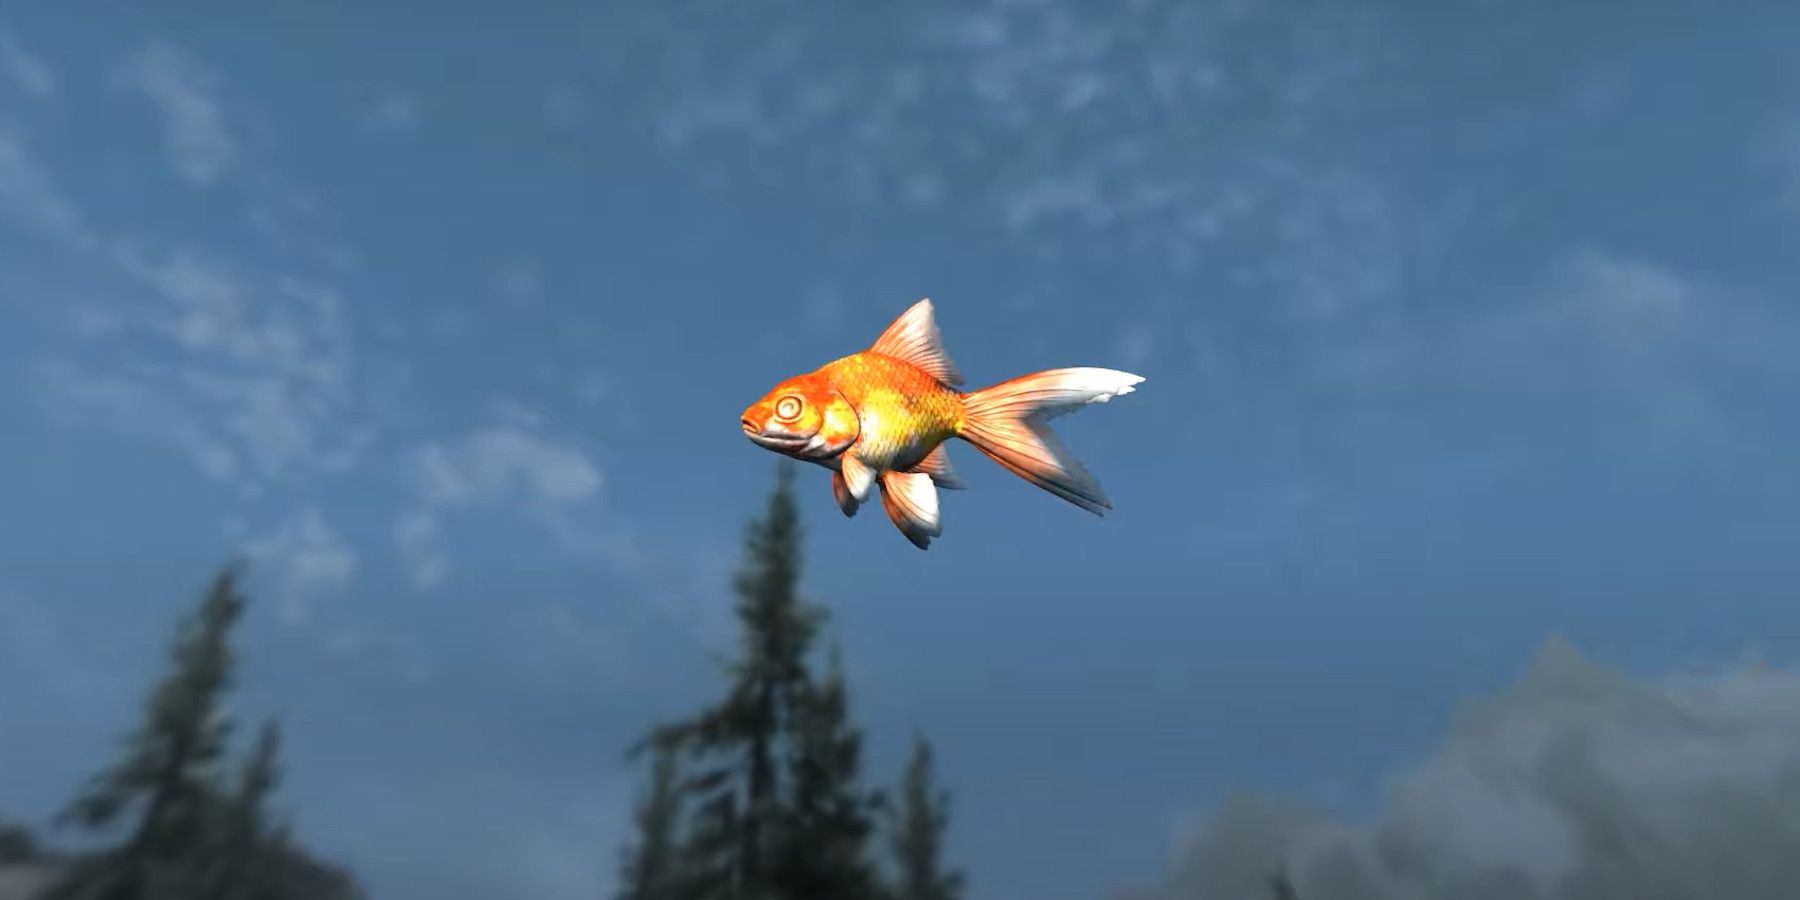 skyrim goldfish location